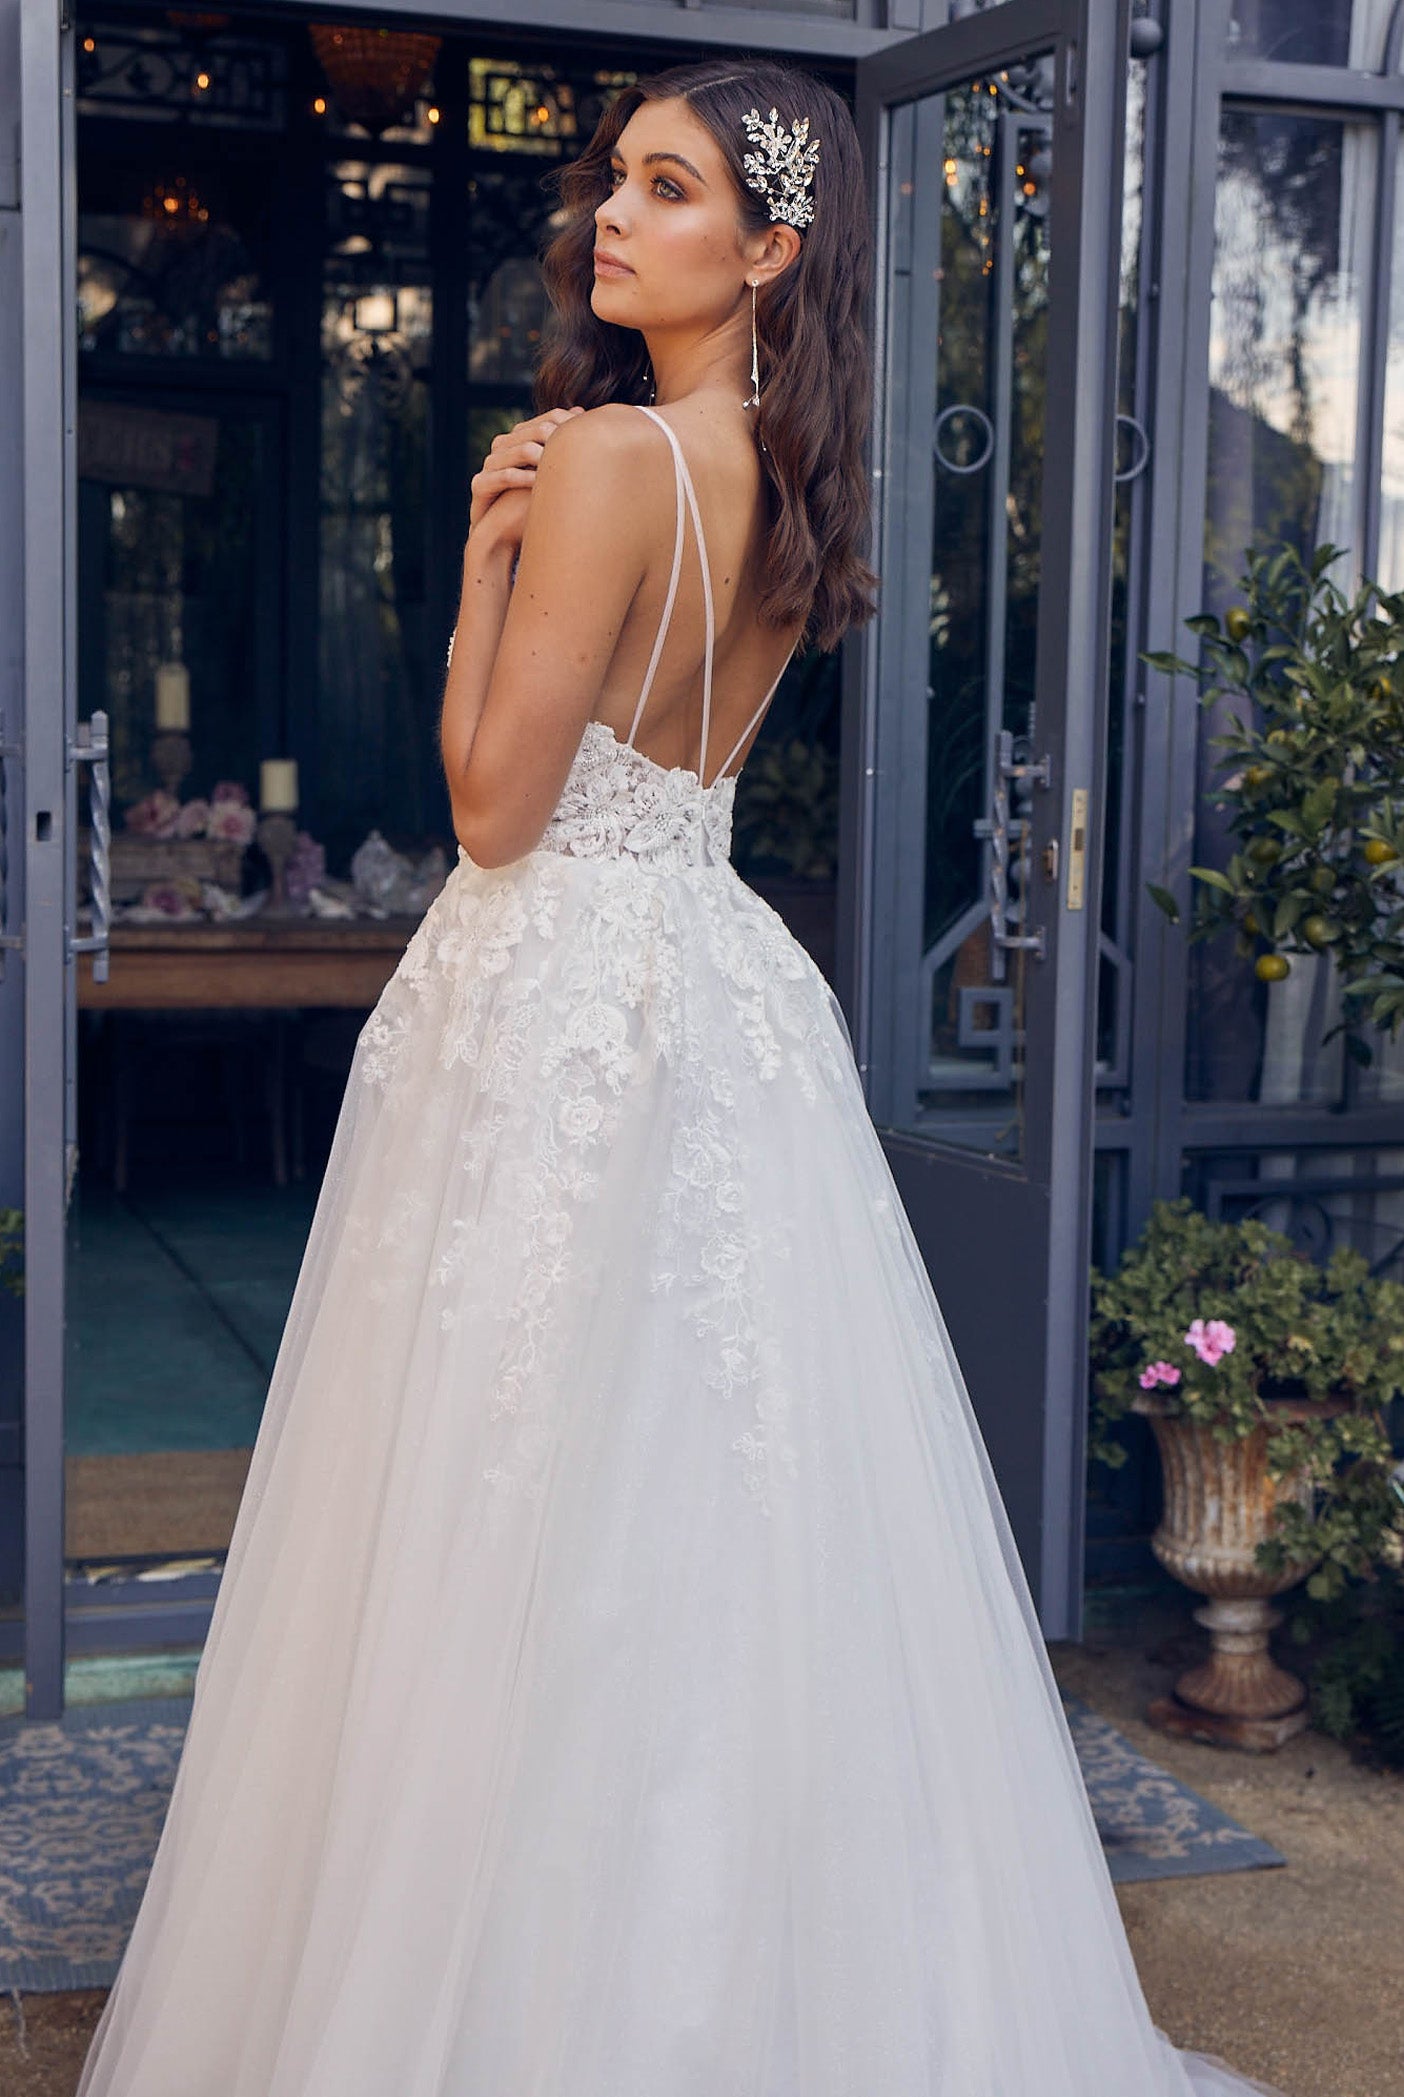 Embroidered Lace Bodice Open Back Long Wedding Dress NXJE933-Wedding Dress-smcfashion.com